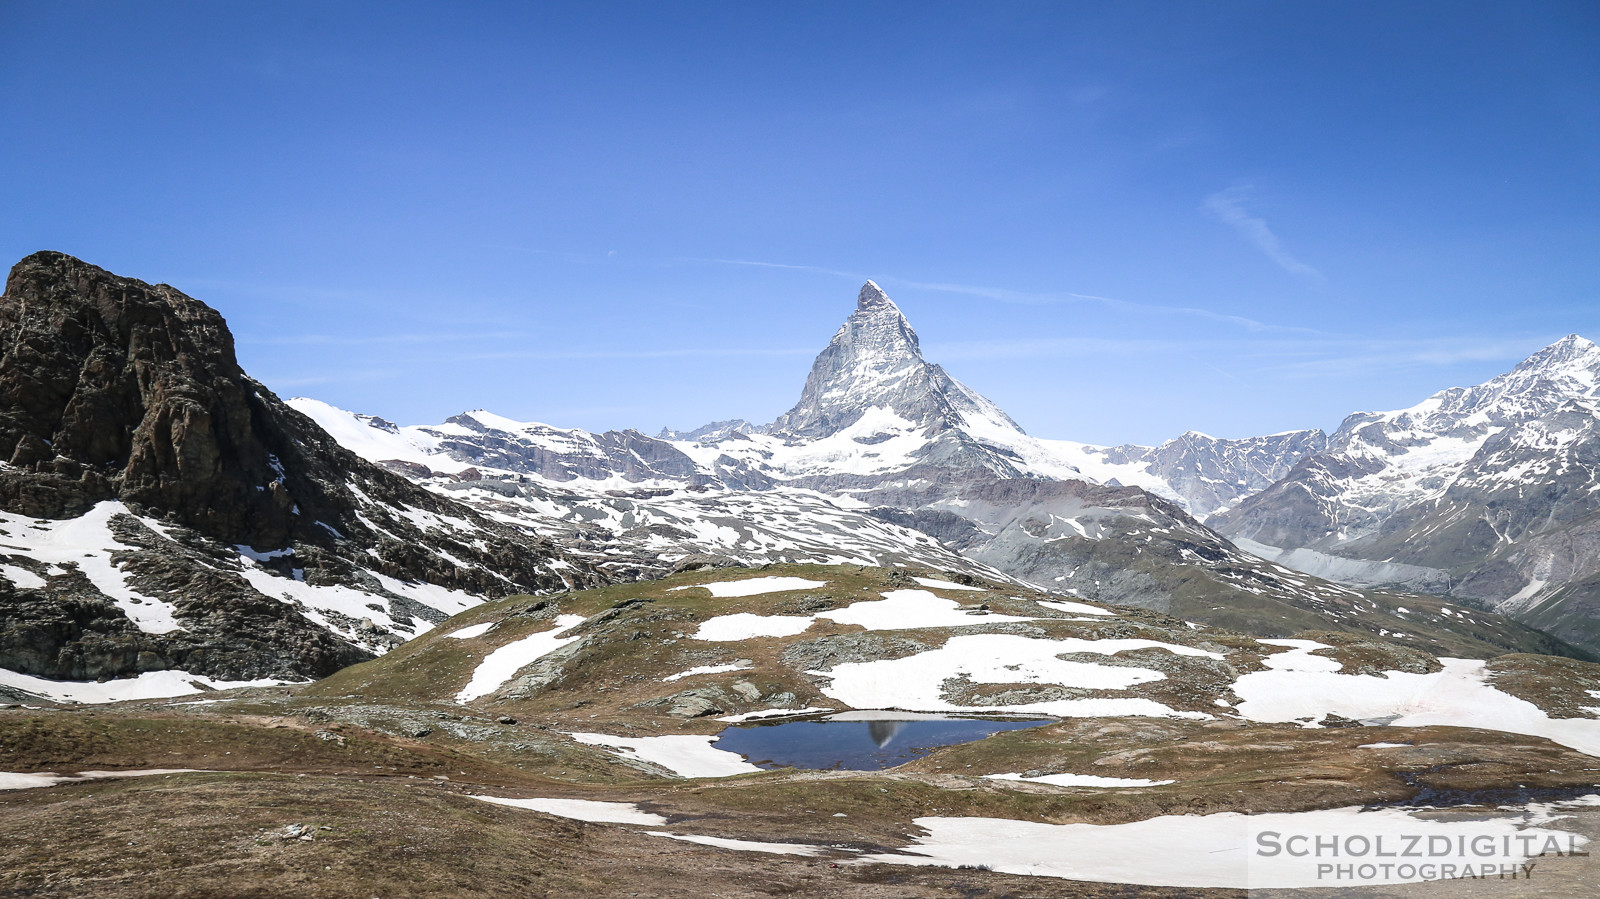 Switzerland, Schweiz, Matterhorn, Hiking, Wandern, Gletscher, Gornergrat, Riffelalp, Riffelalm, Mark Twain, Alpen, Zermatt